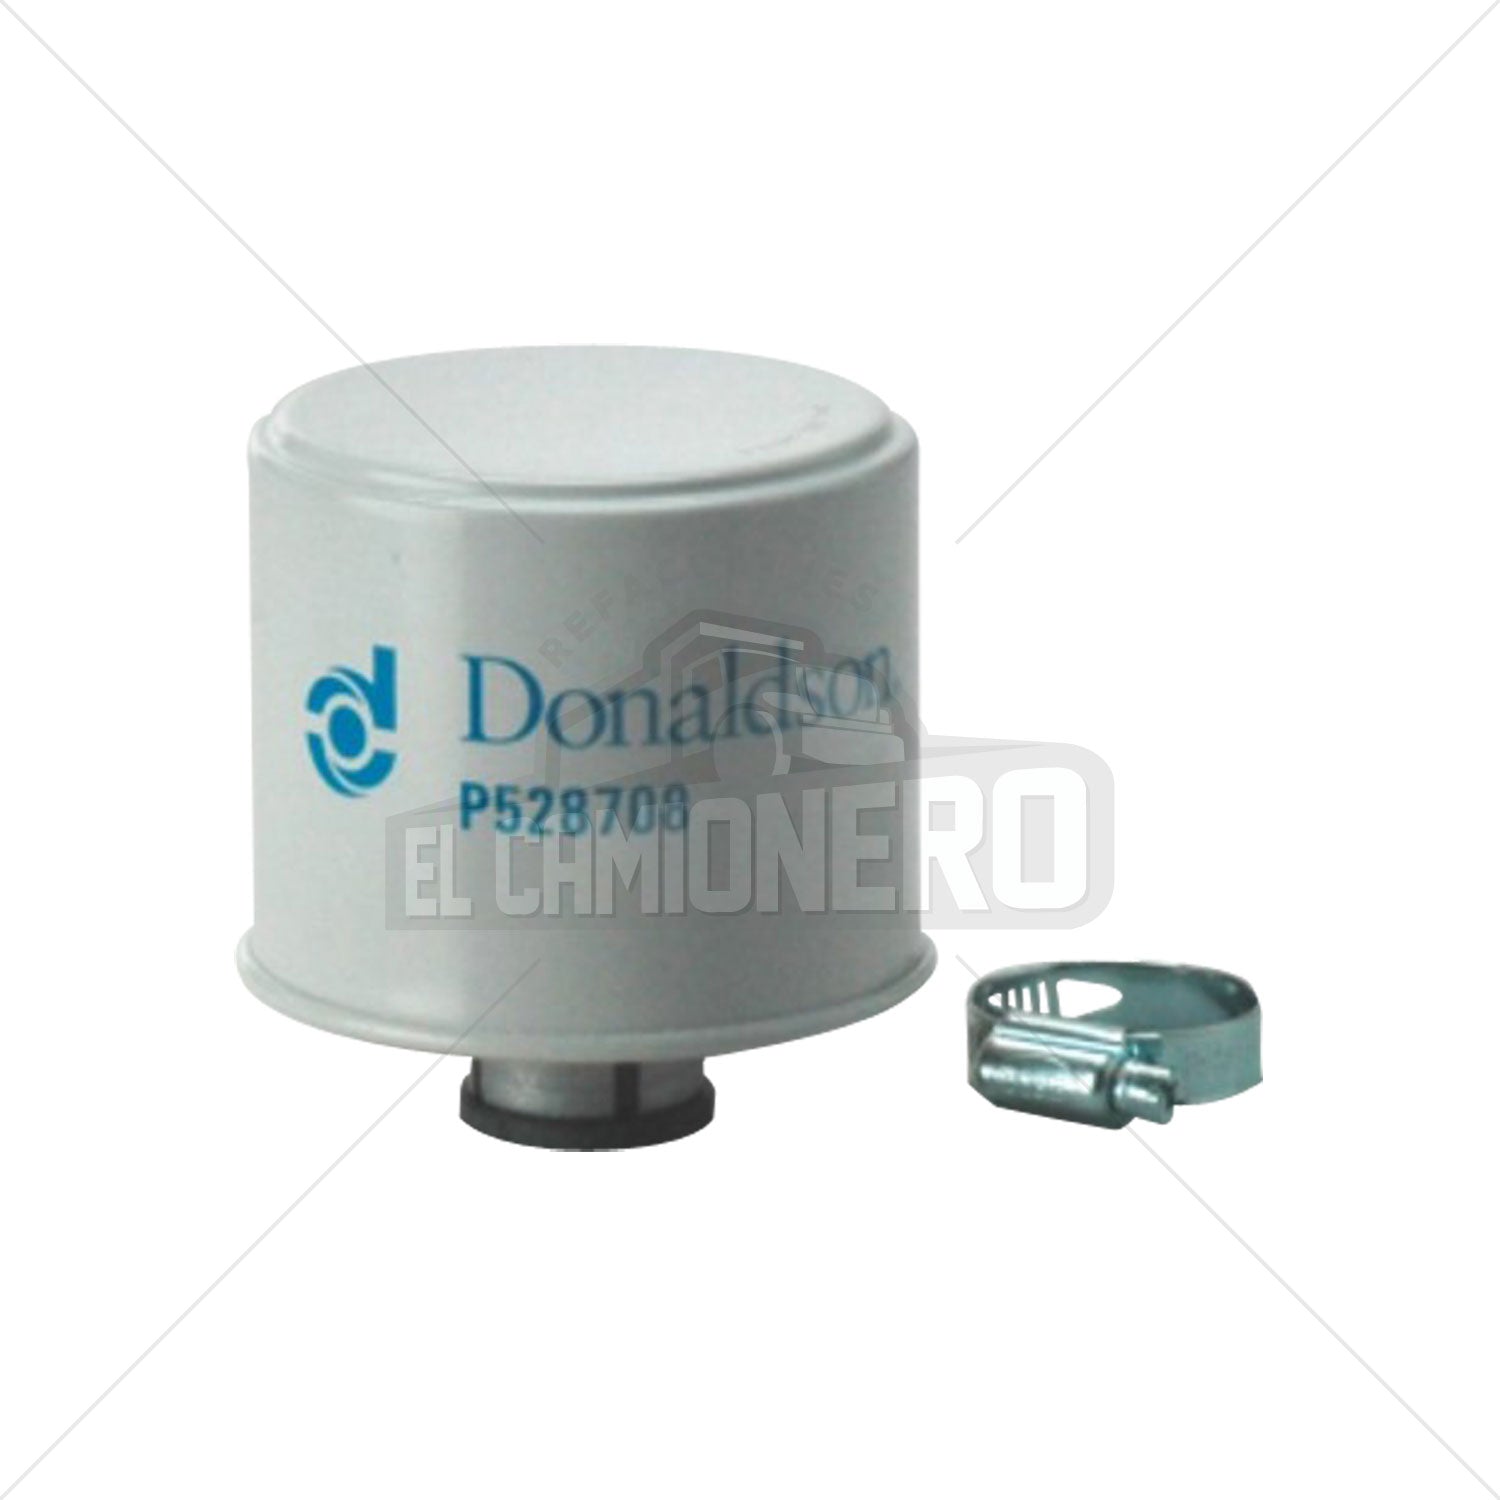 Respiradero de aire Donaldson P528708 - ELCAMIONERO.MX